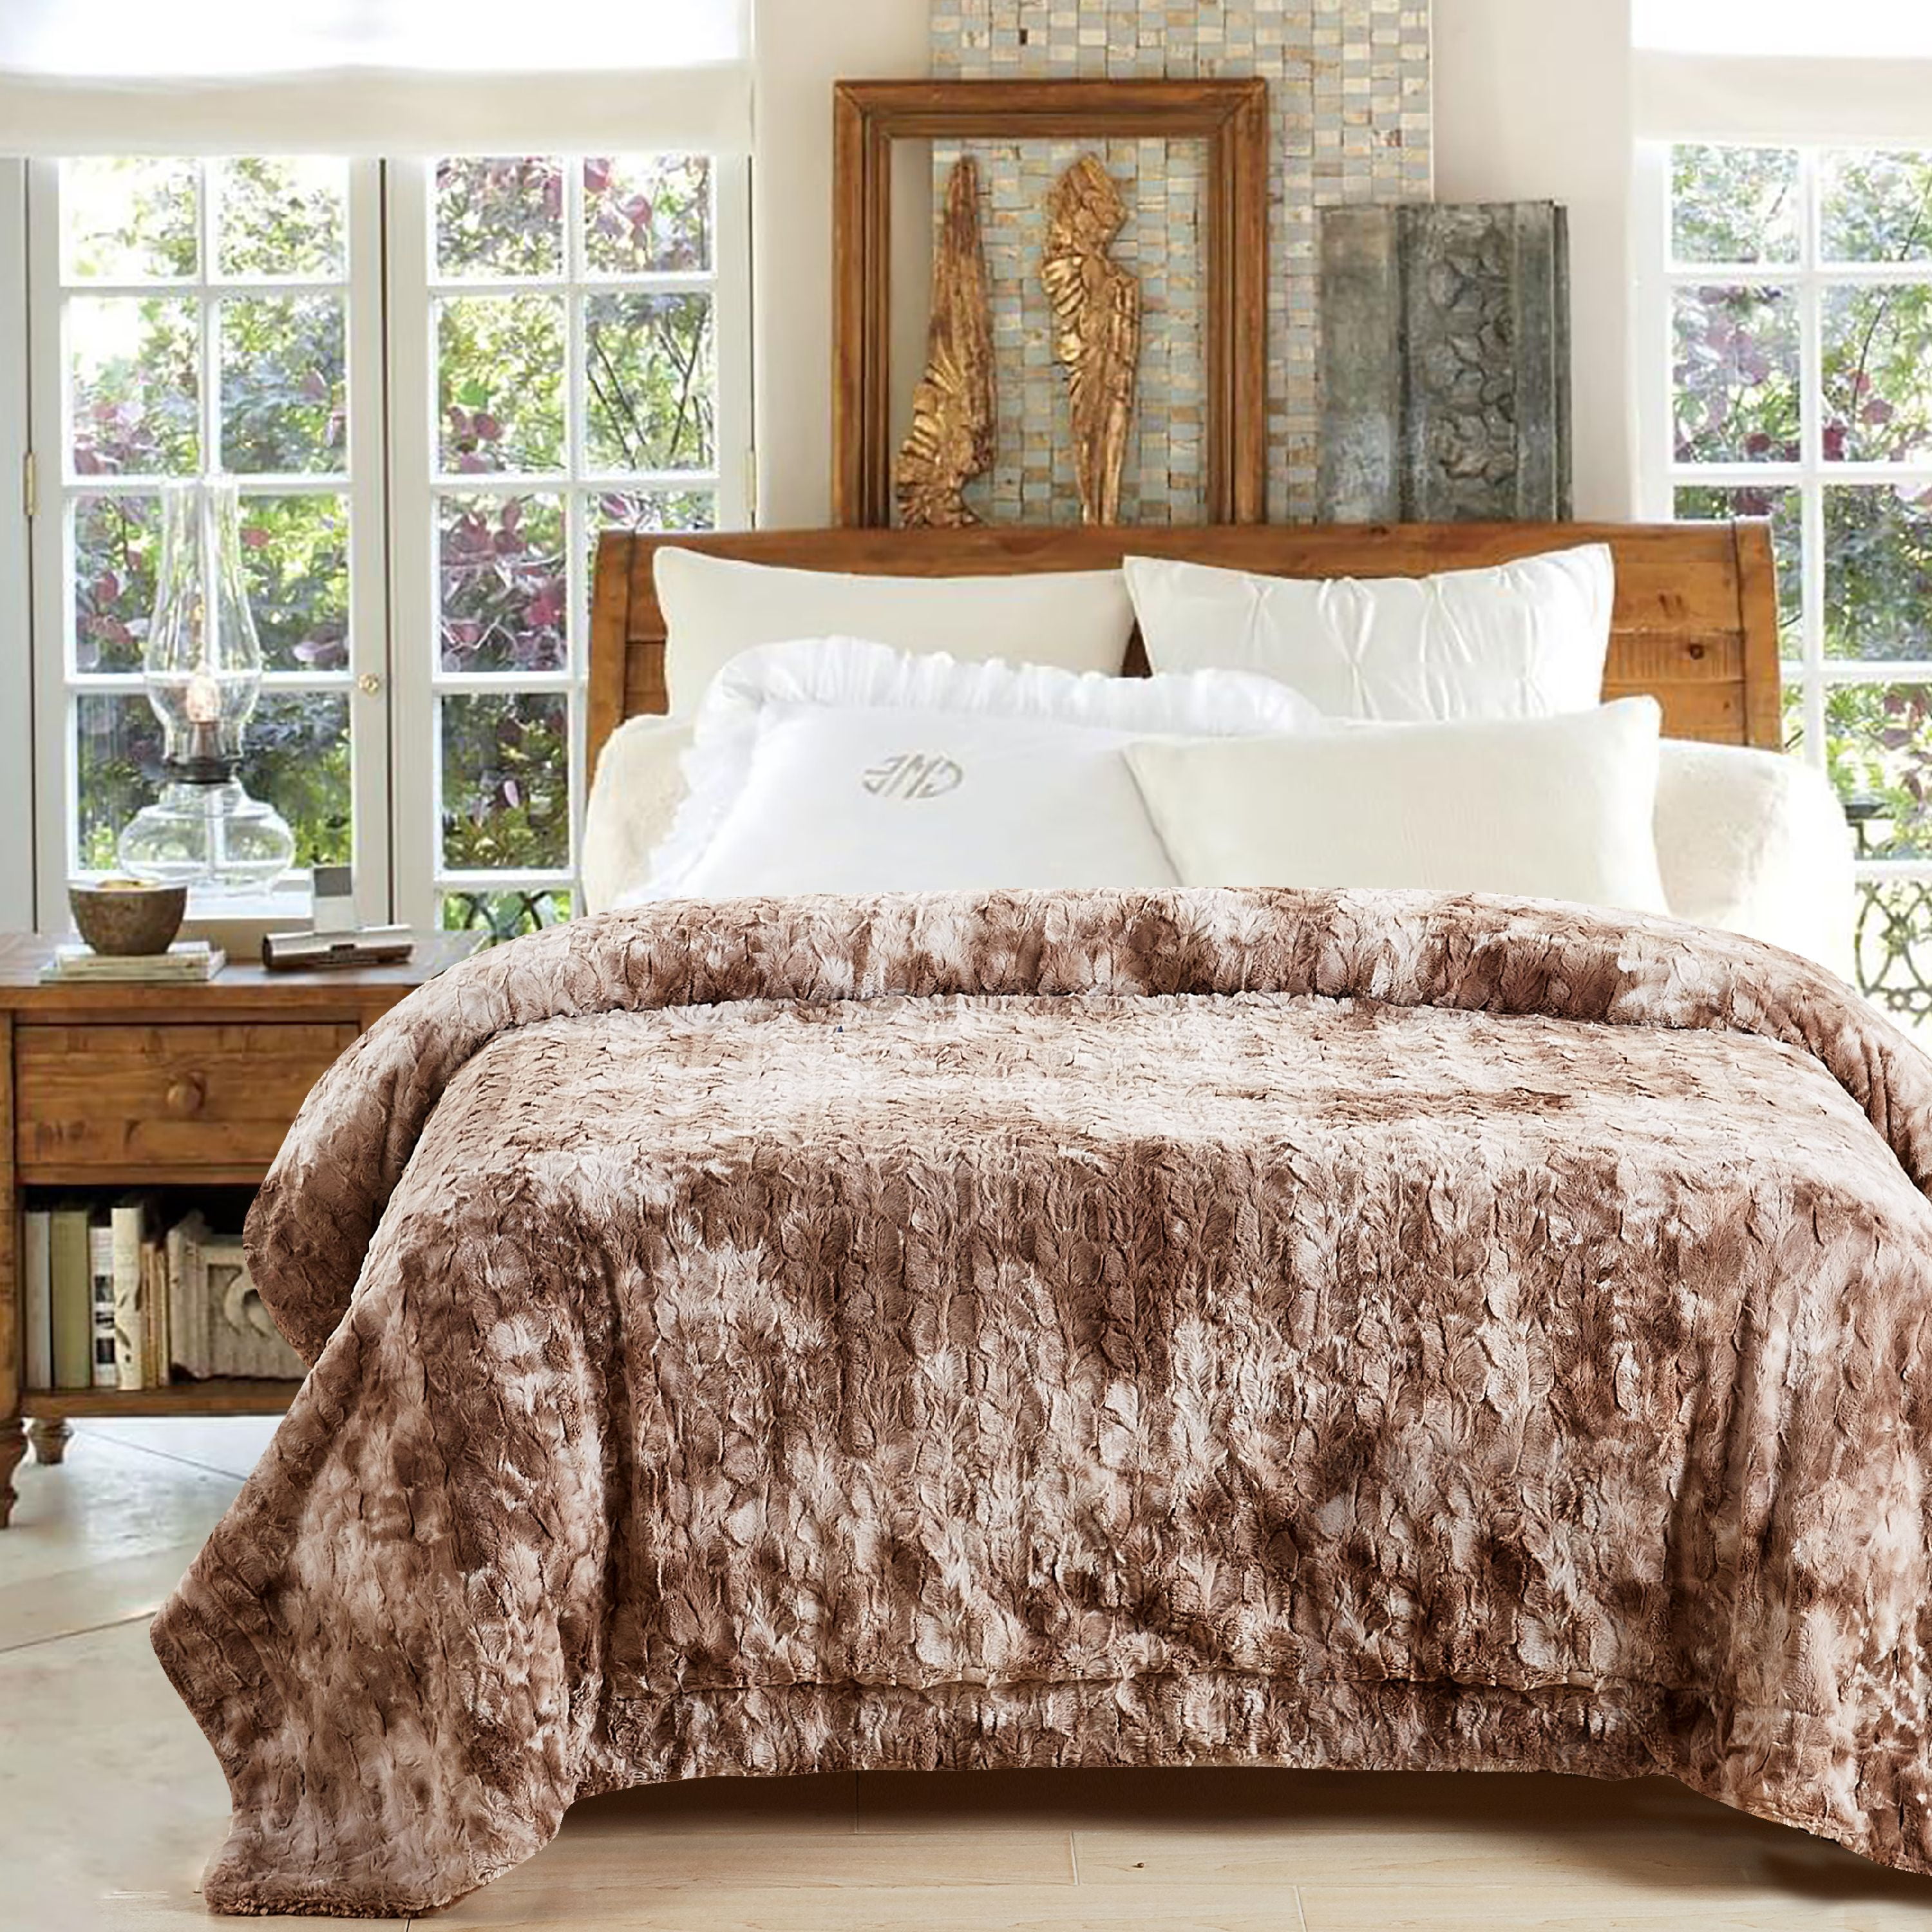 Soft Bed Blanket for Sofa Living Room Bedroom SUABO White Flowers Throw Blanket for Boys Girls Adults